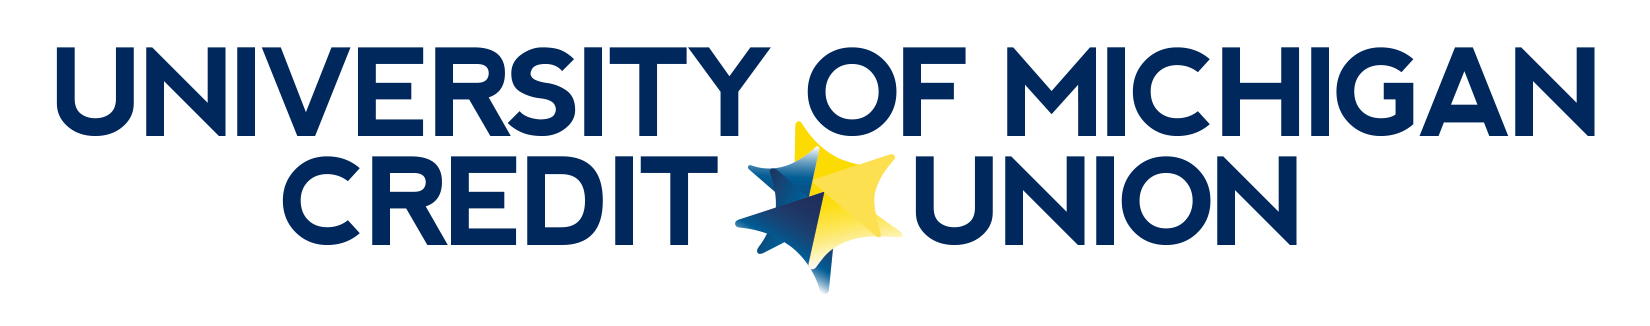 University of Michigan Credit Union logo